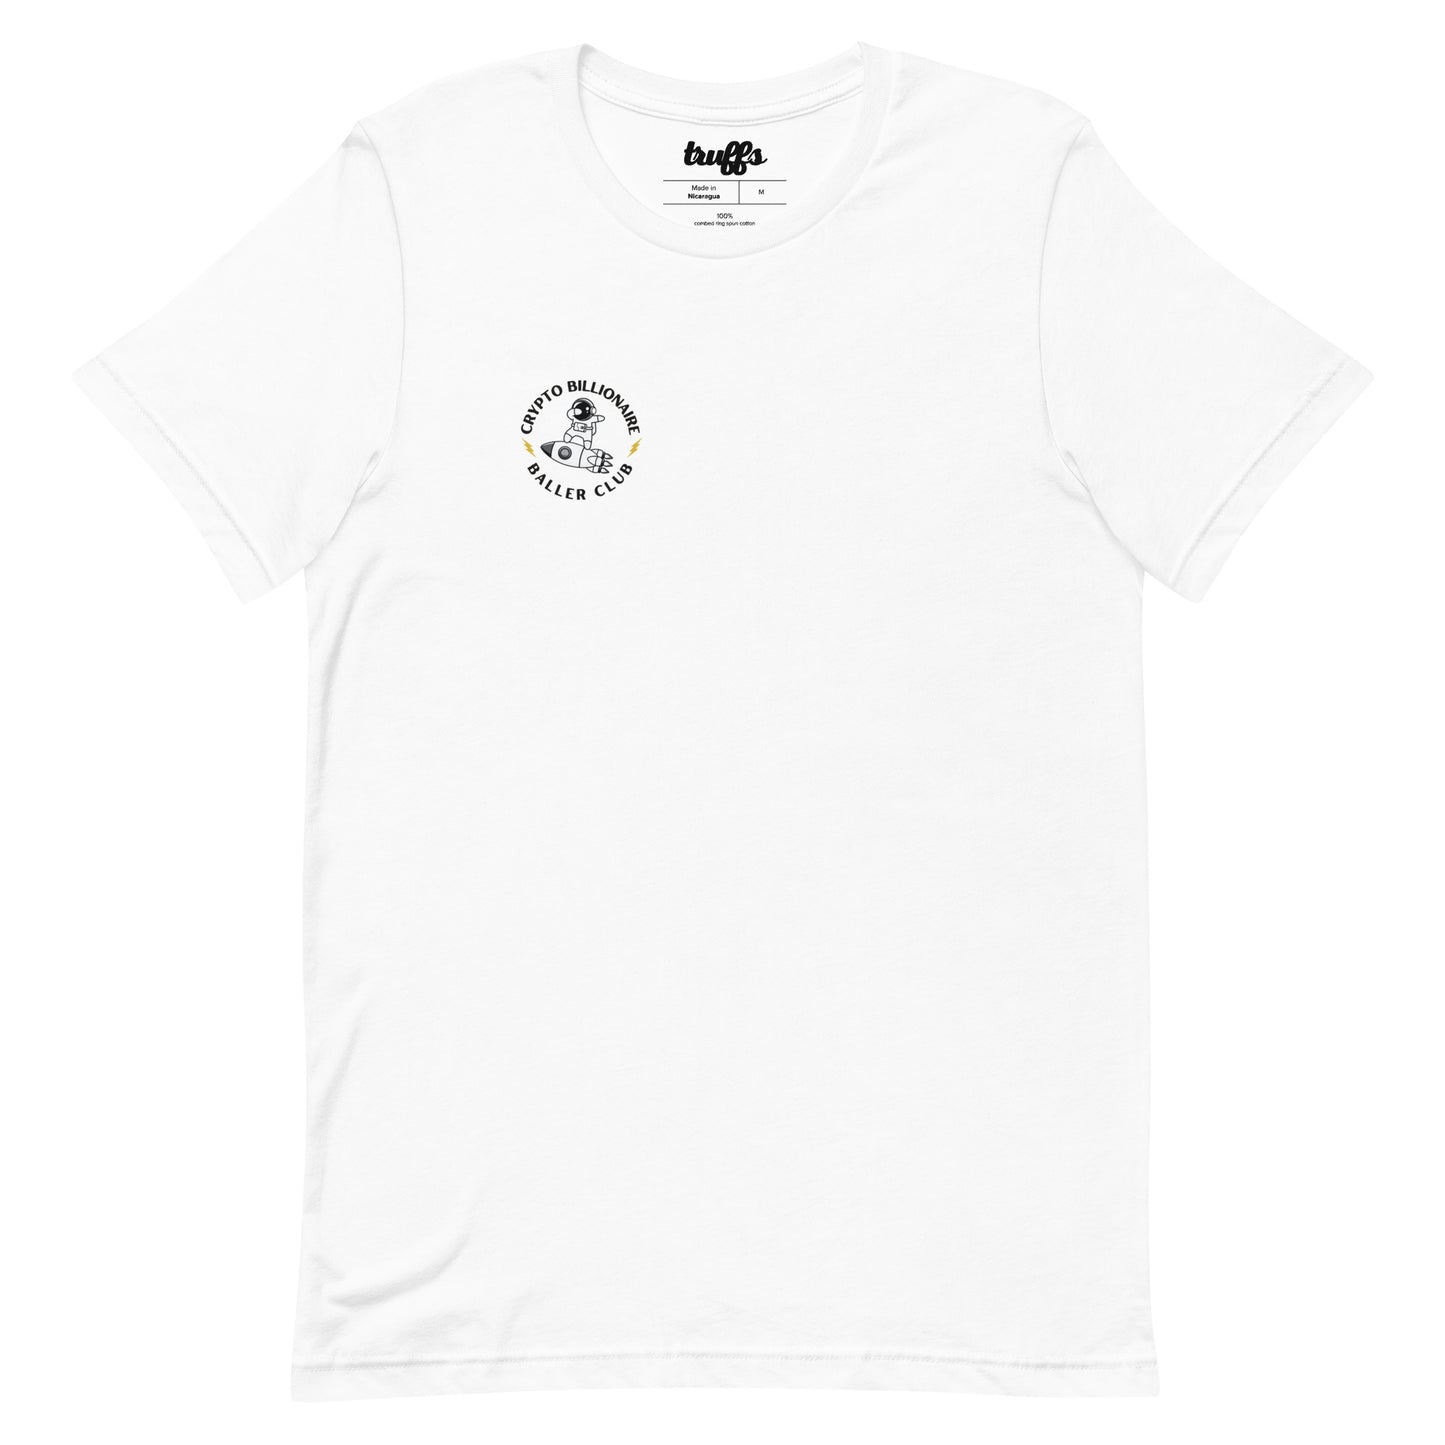 Crypto Billionaire Baller Club NFT T-Shirt - White Front